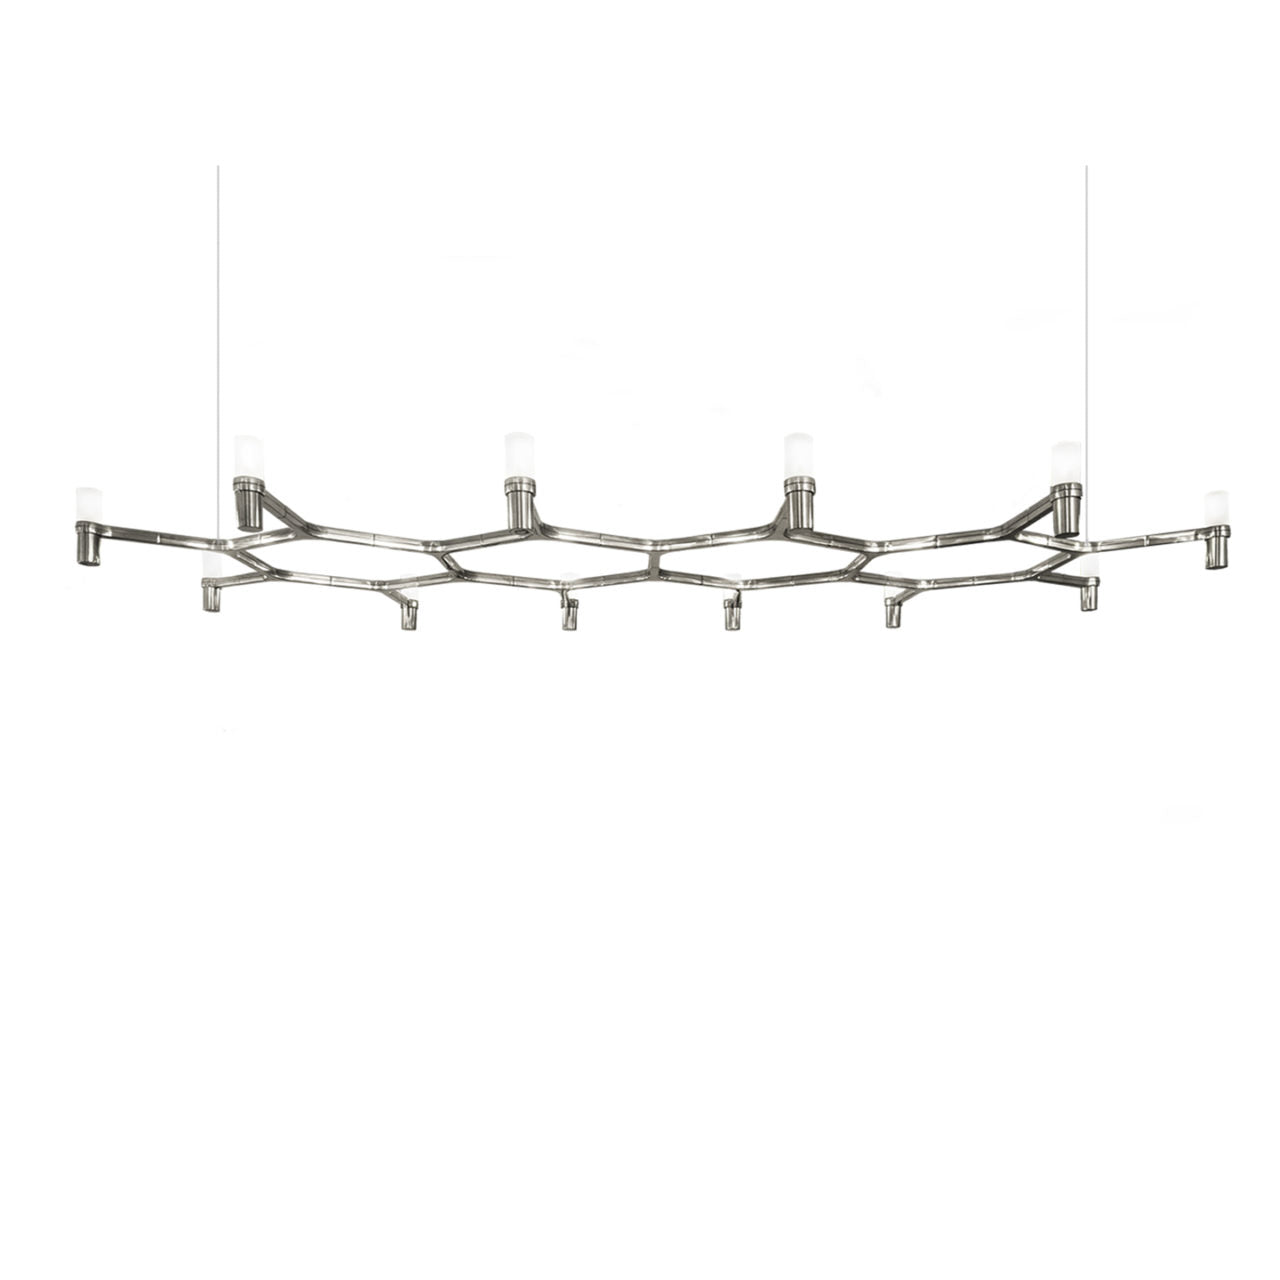 Chrome linear hang rail pendant for dining area